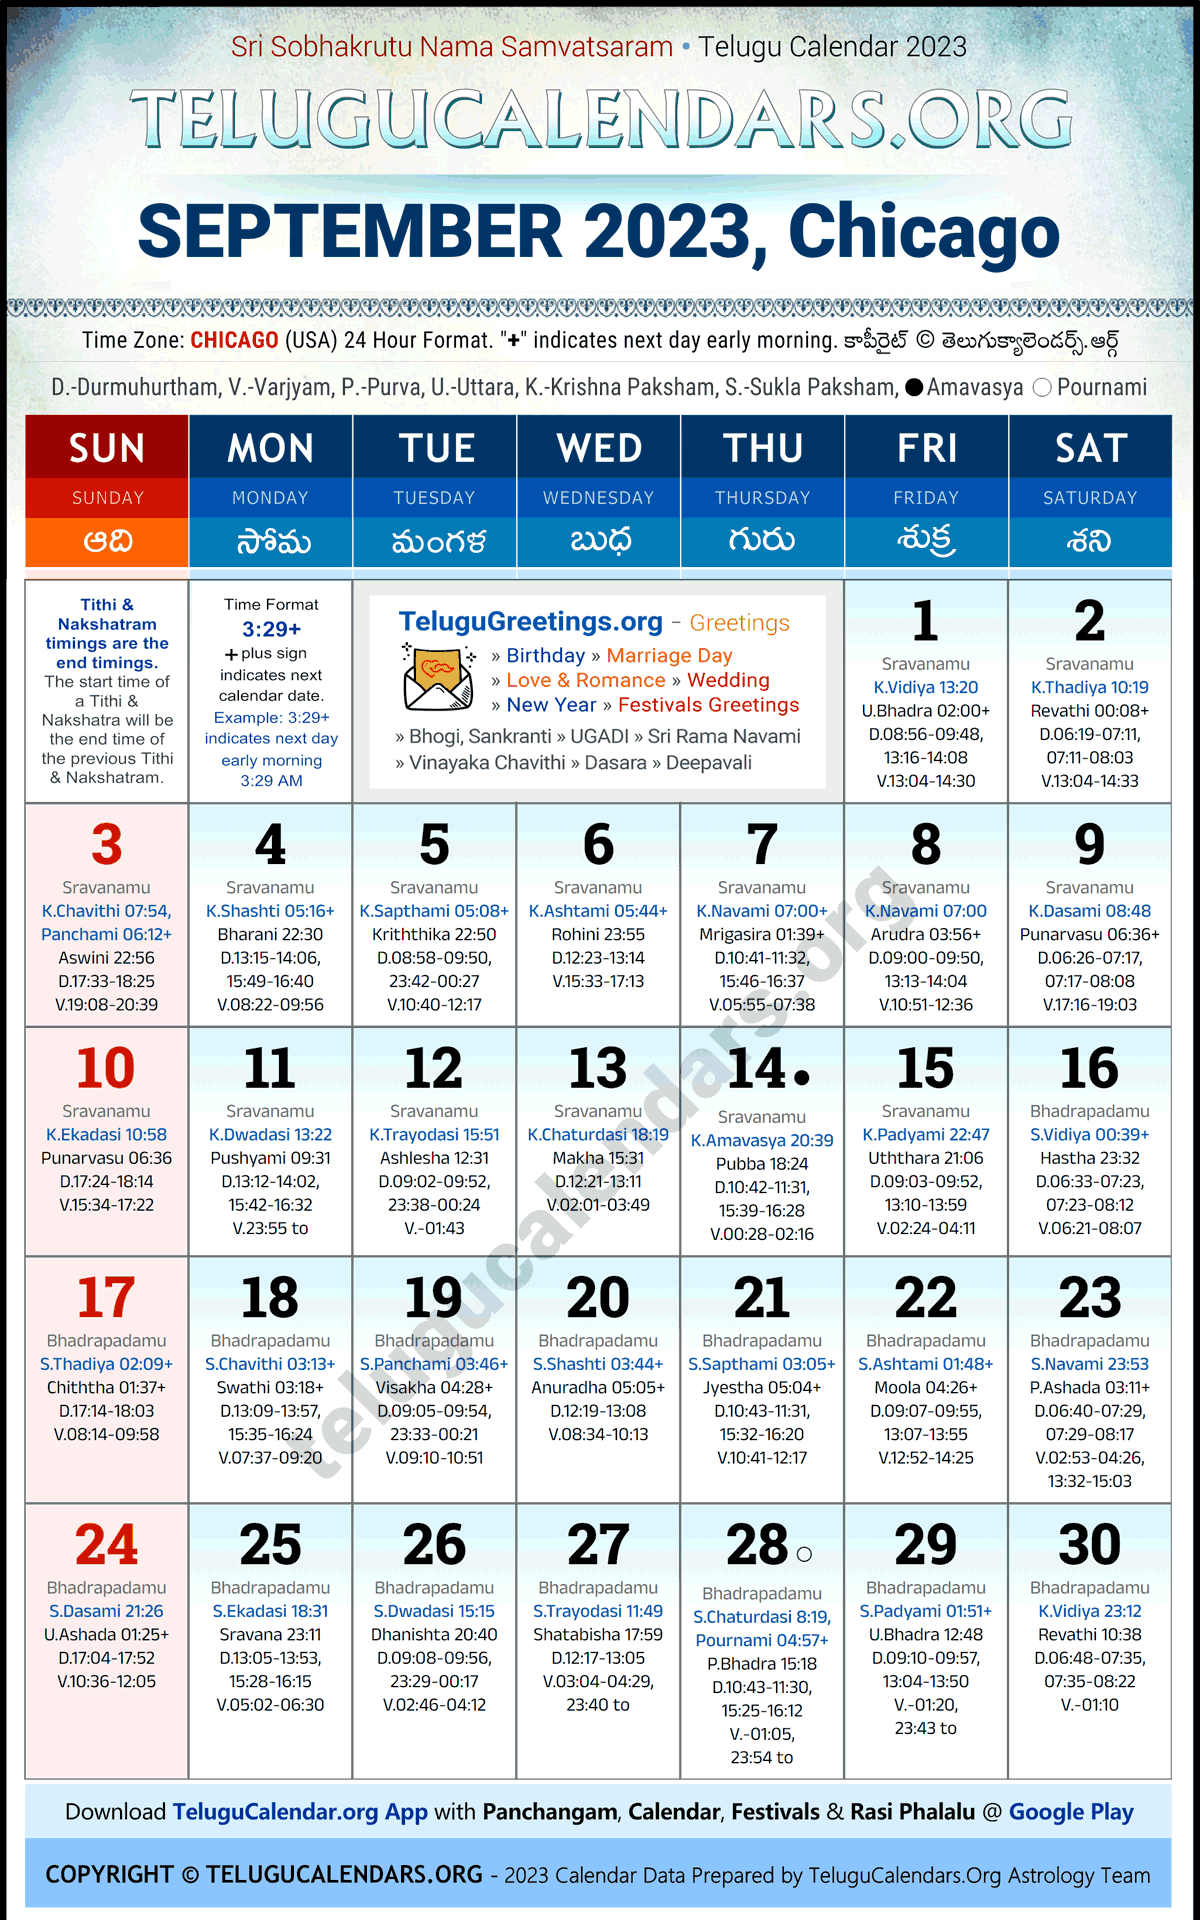 Telugu Calendar 2023 September Festivals for Chicago